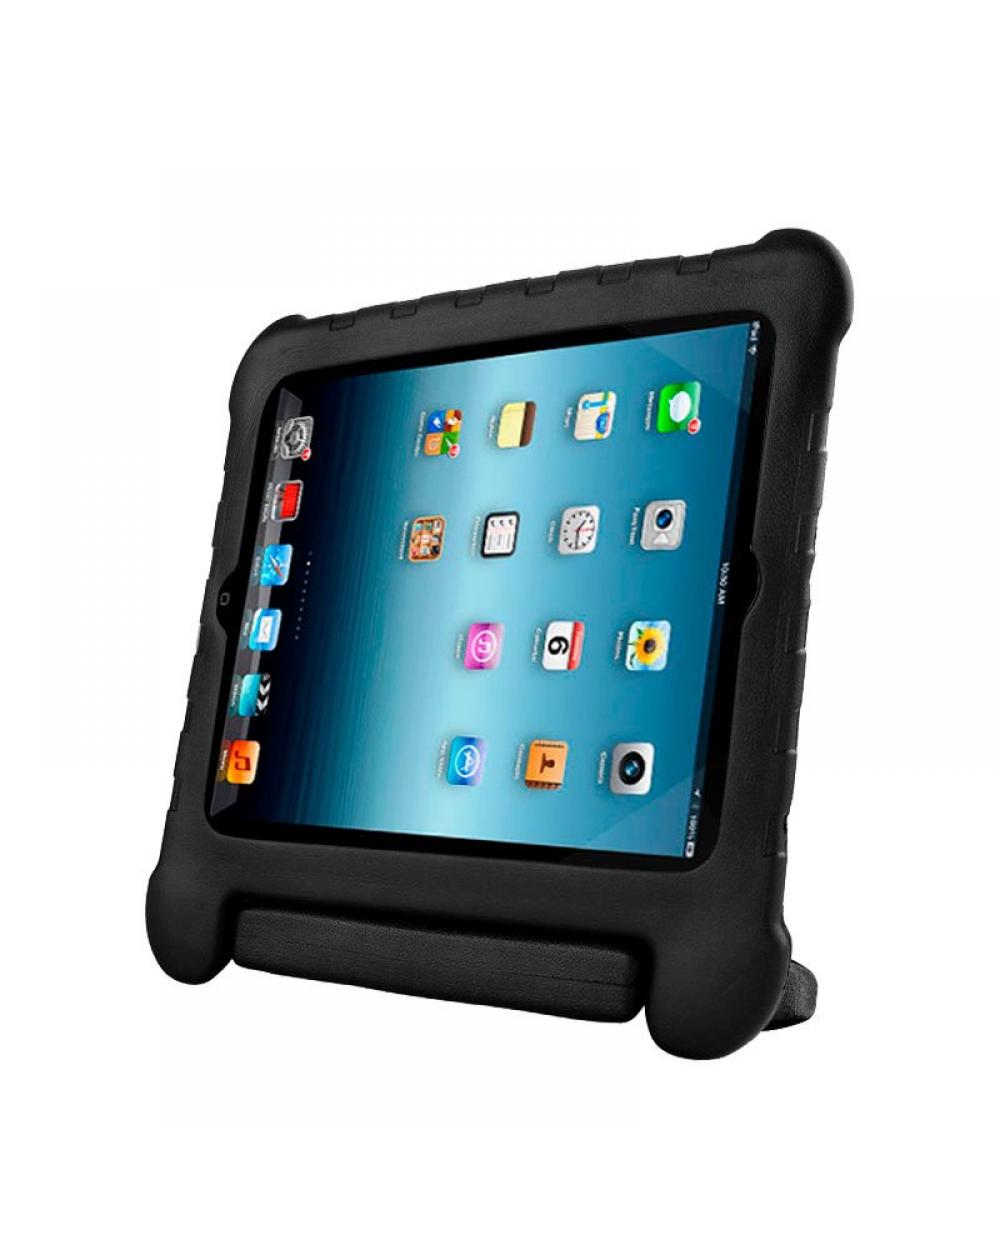 Funda COOL para iPad 2 / iPad 3 / 4 Ultrashock color Negro - Imagen 1